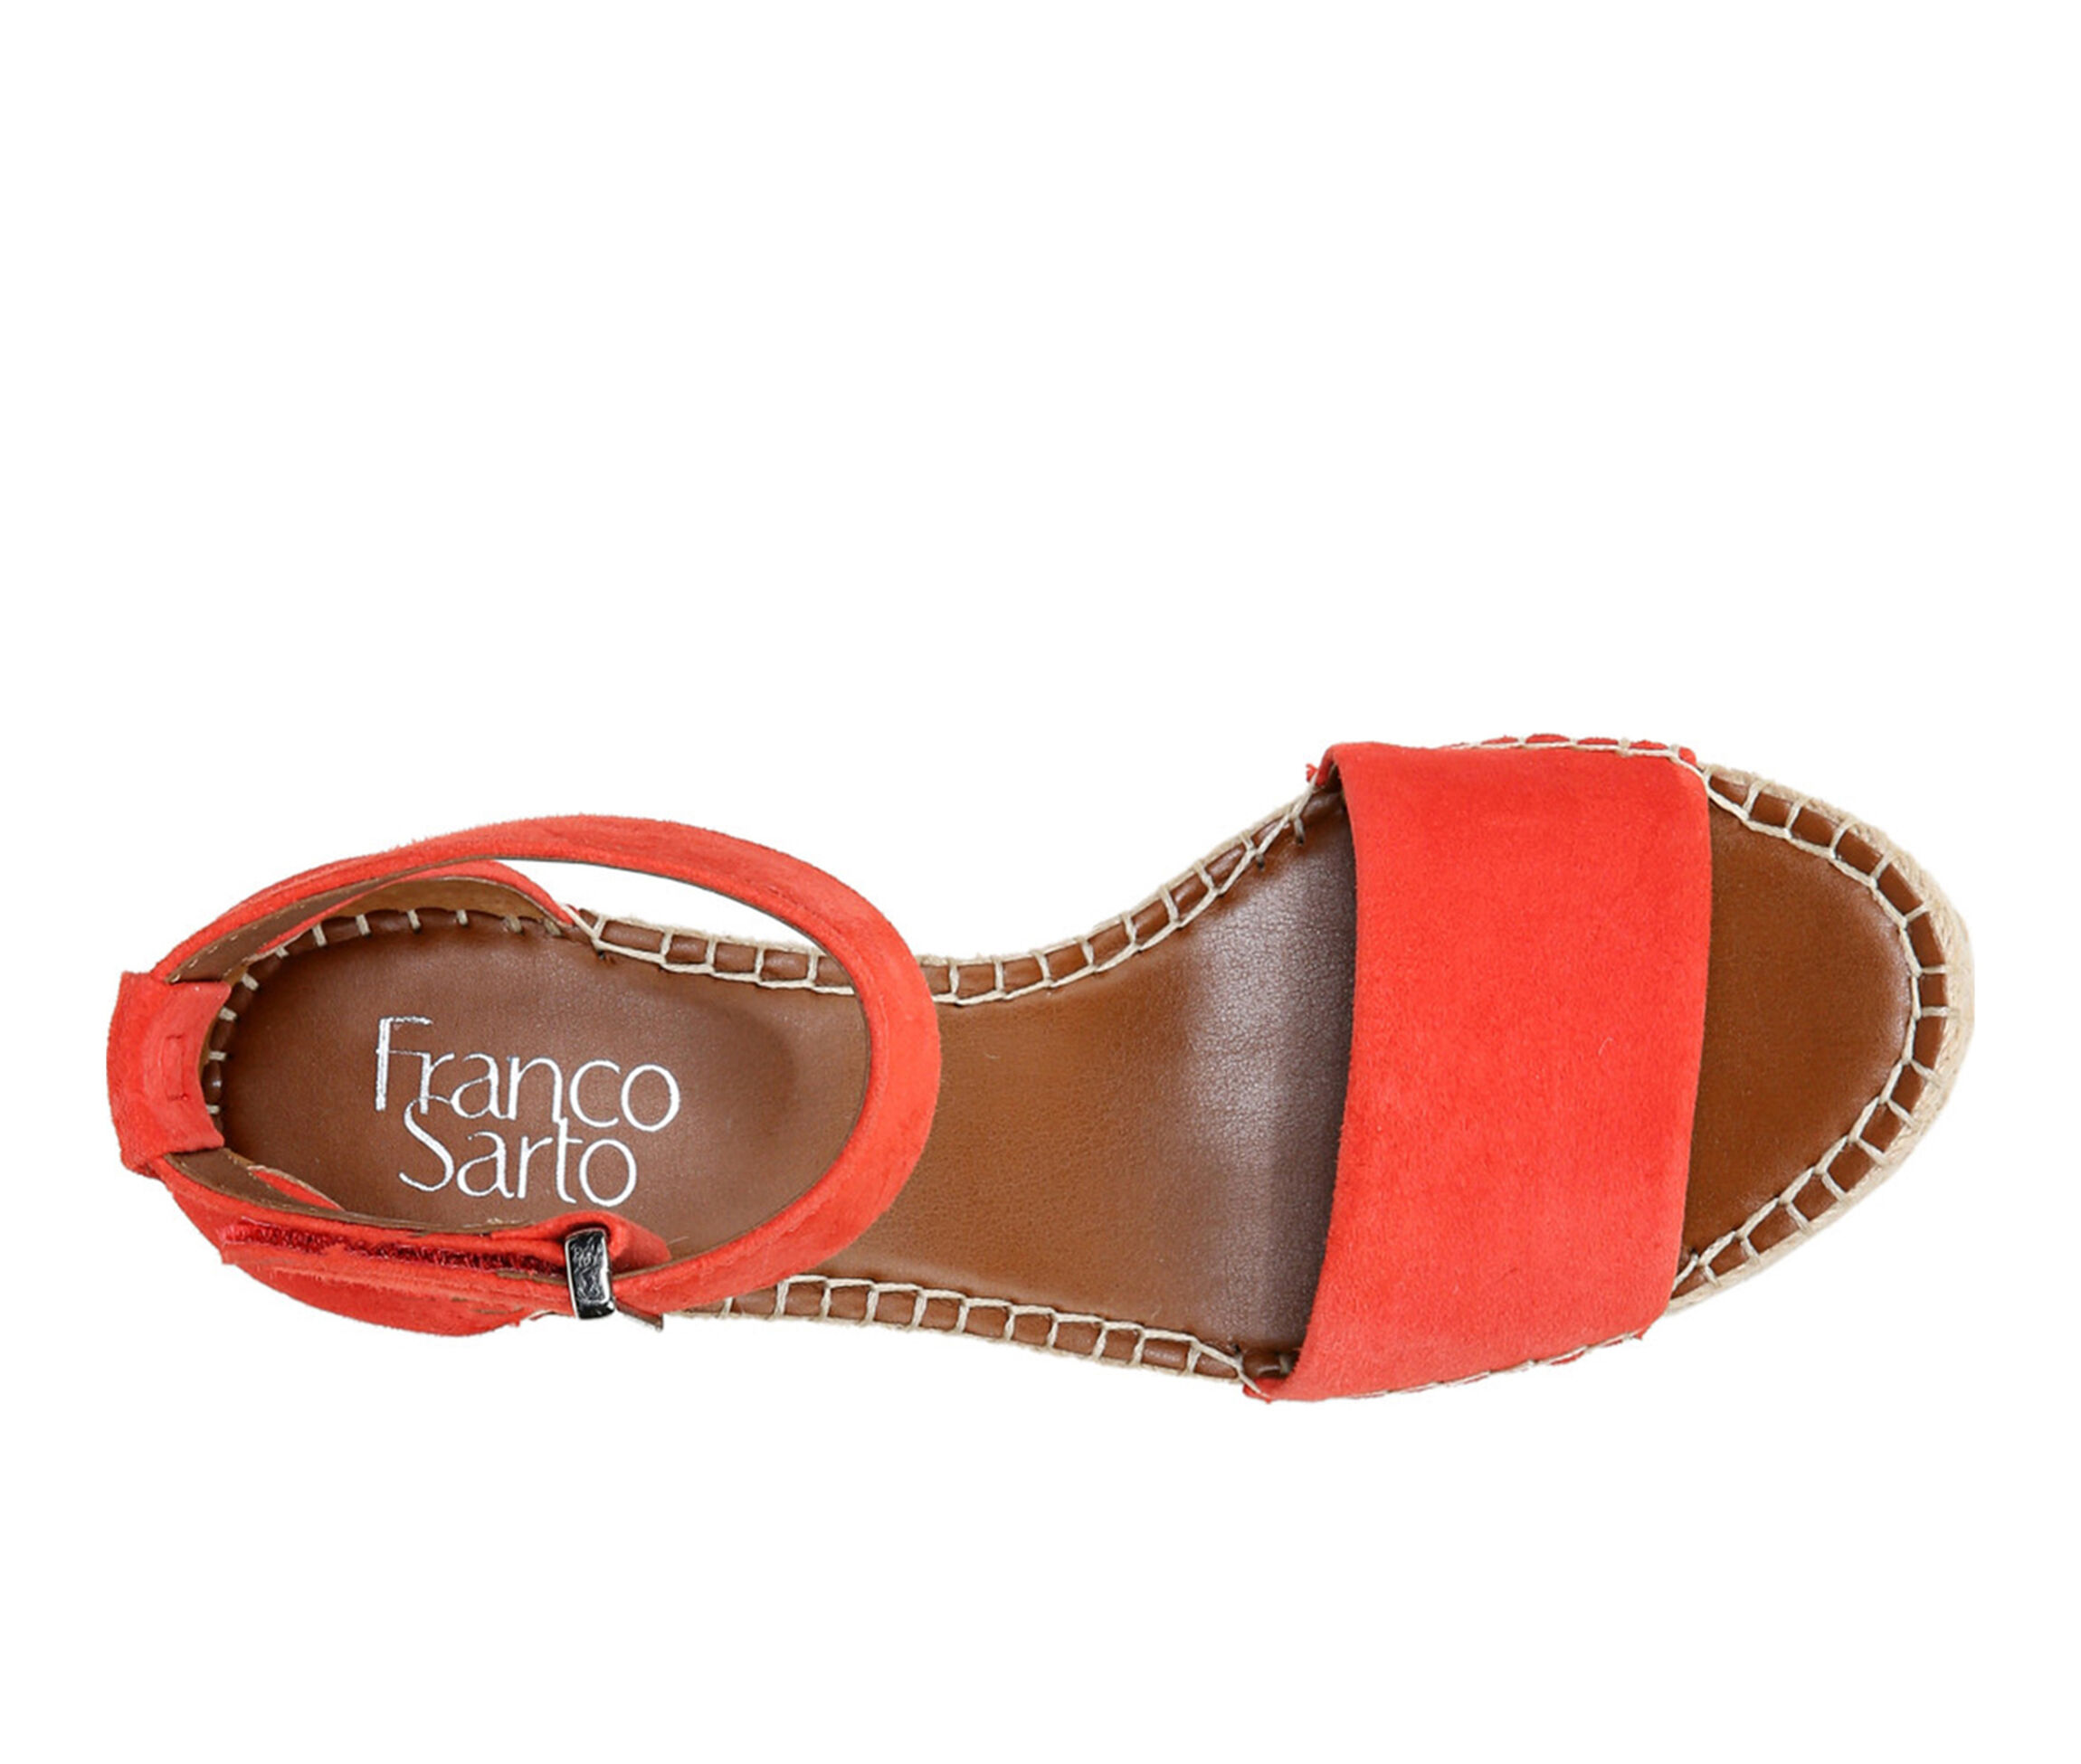 Women's Franco Sarto L-Clemens Wedge Sandals in Tangelo Size 6 Medium